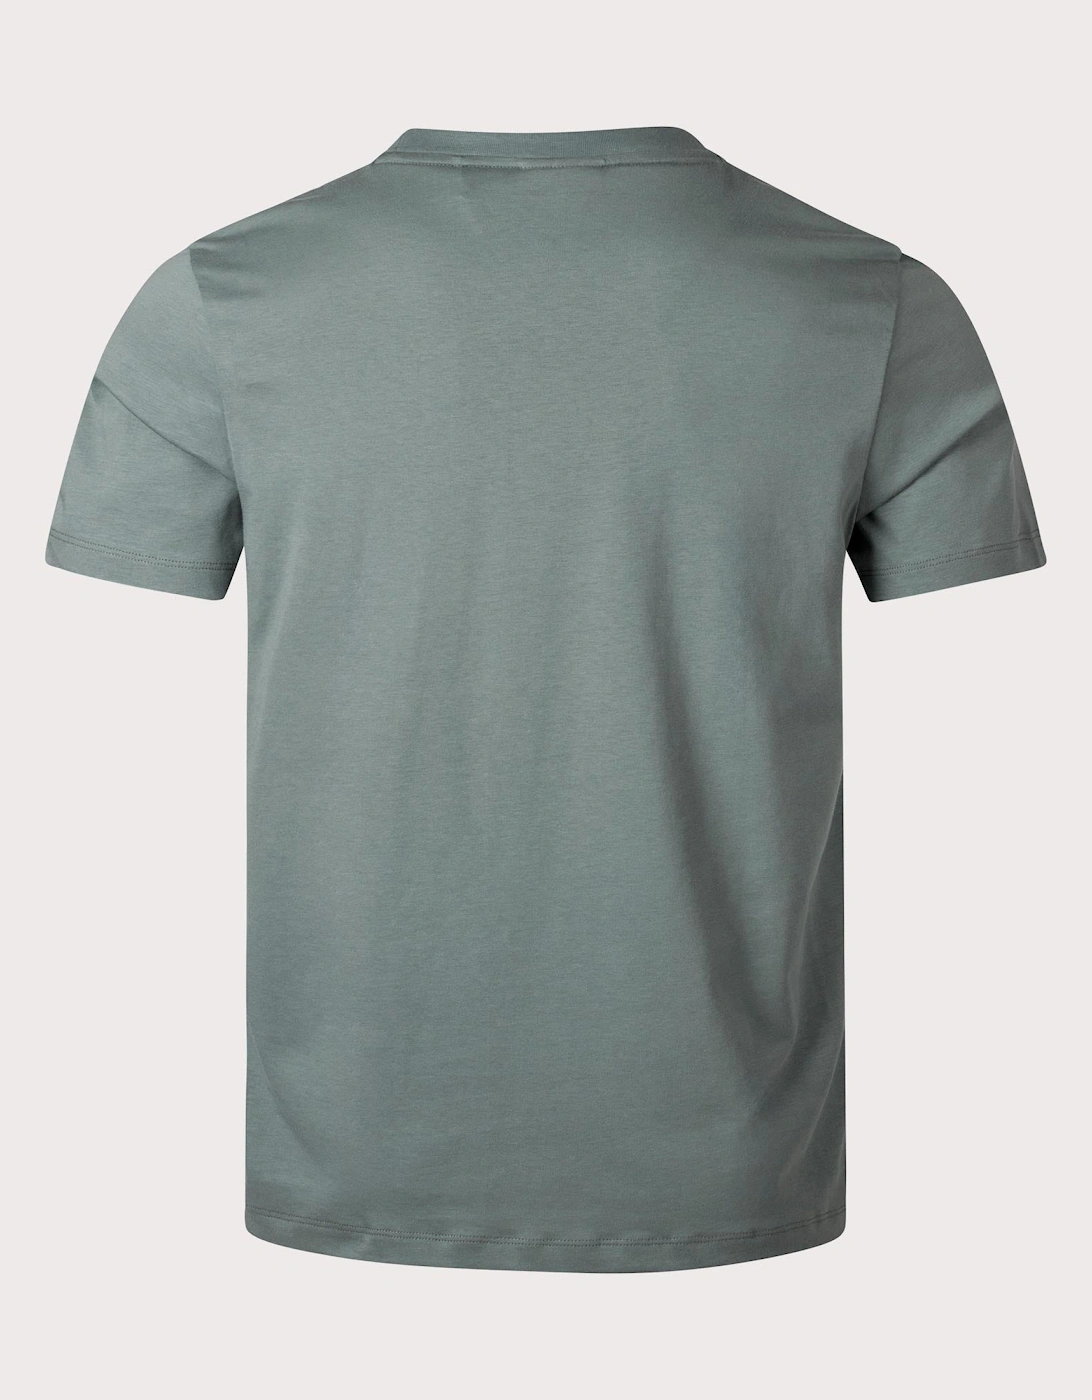 Detzington241 T-Shirt